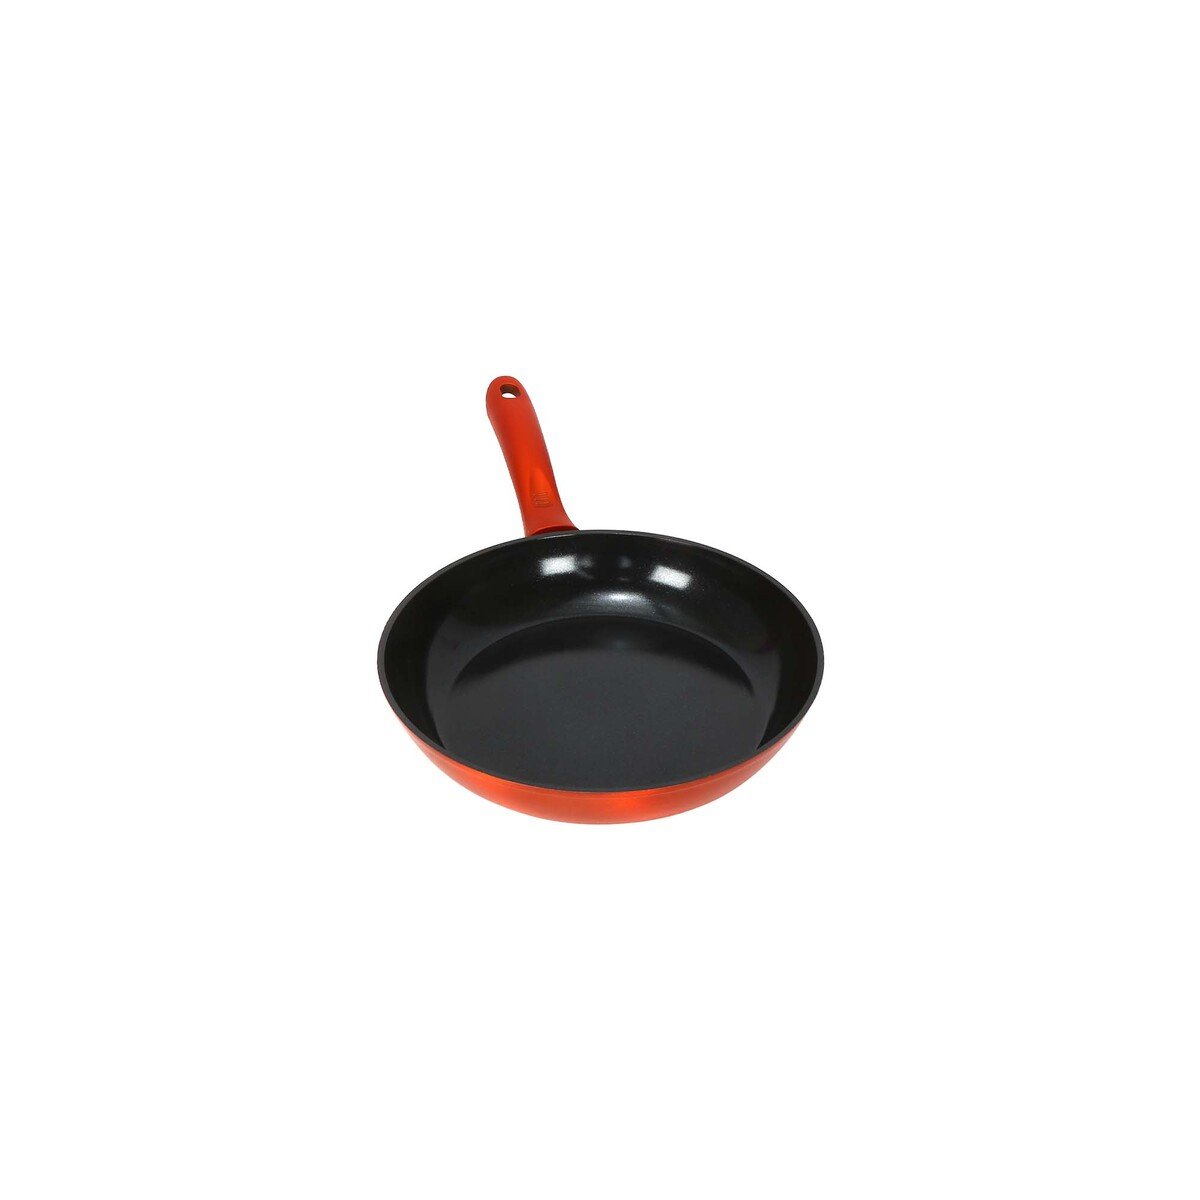 Chefline Ceramic Fry Pan, 20 cm, Red, DZJ20